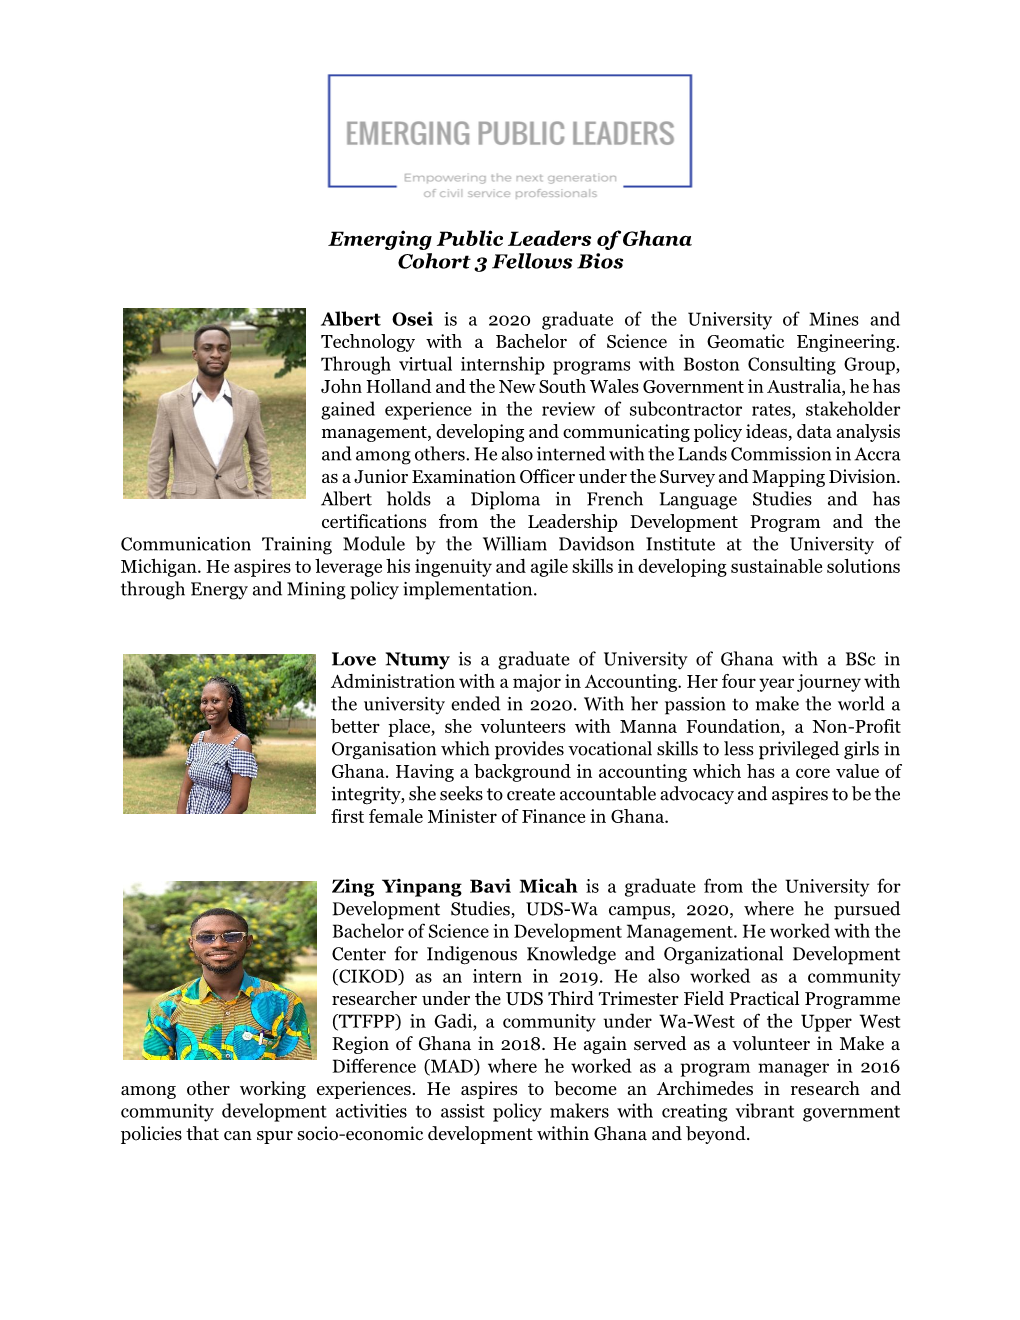 Emerging Public Leaders of Ghana Cohort 3 Fellows Bios